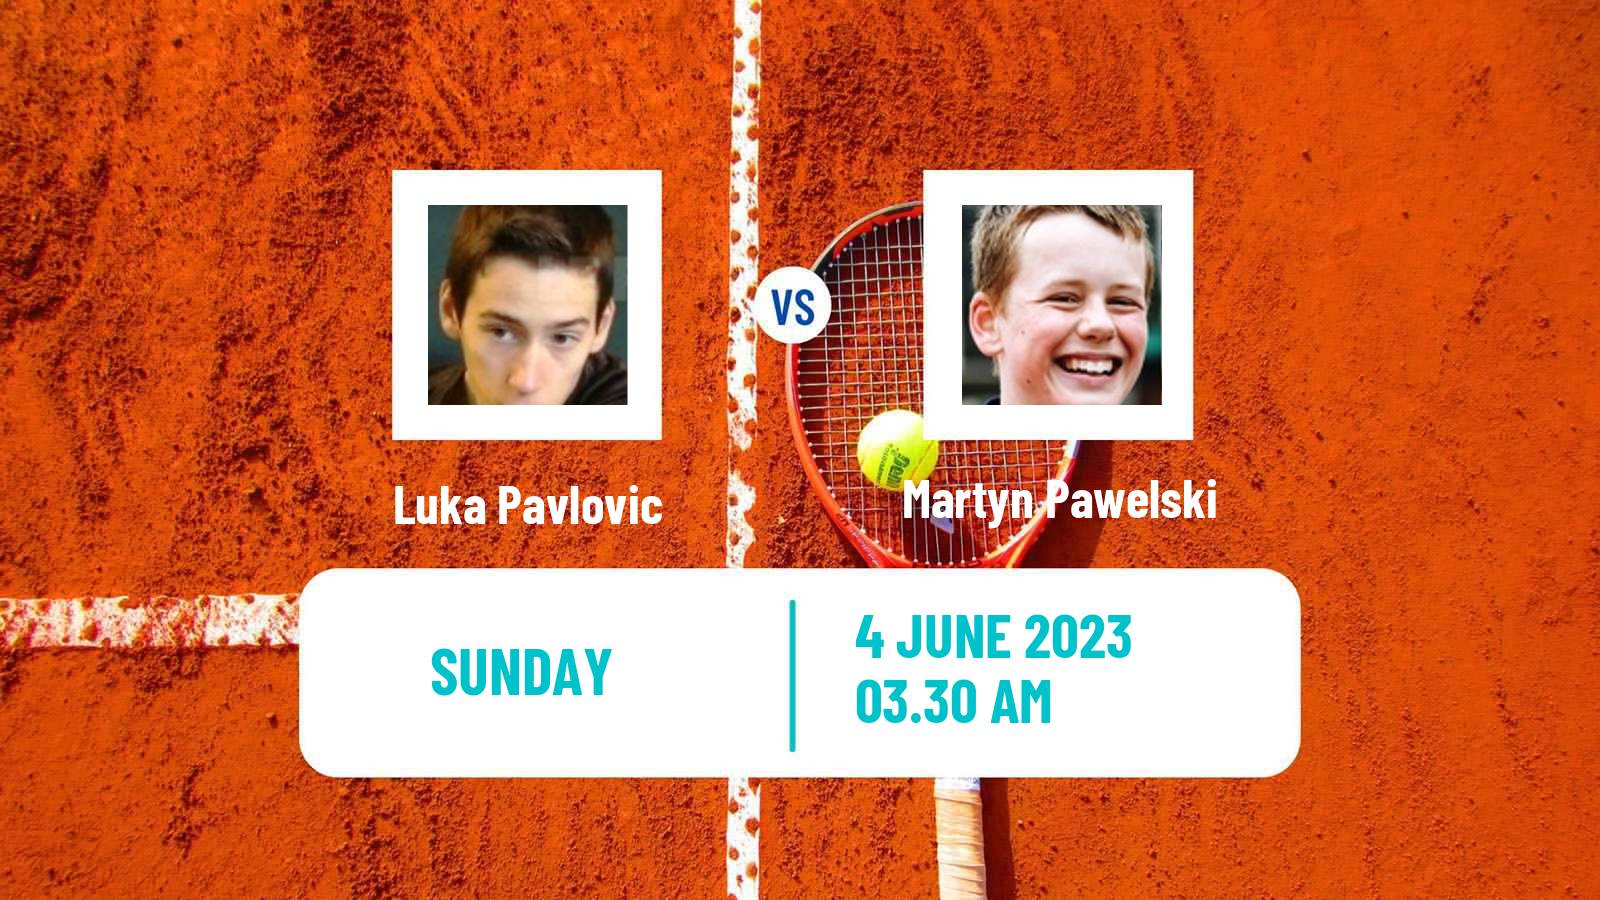 Tennis ITF M15 Kursumlijska Banja 4 Men Luka Pavlovic - Martyn Pawelski